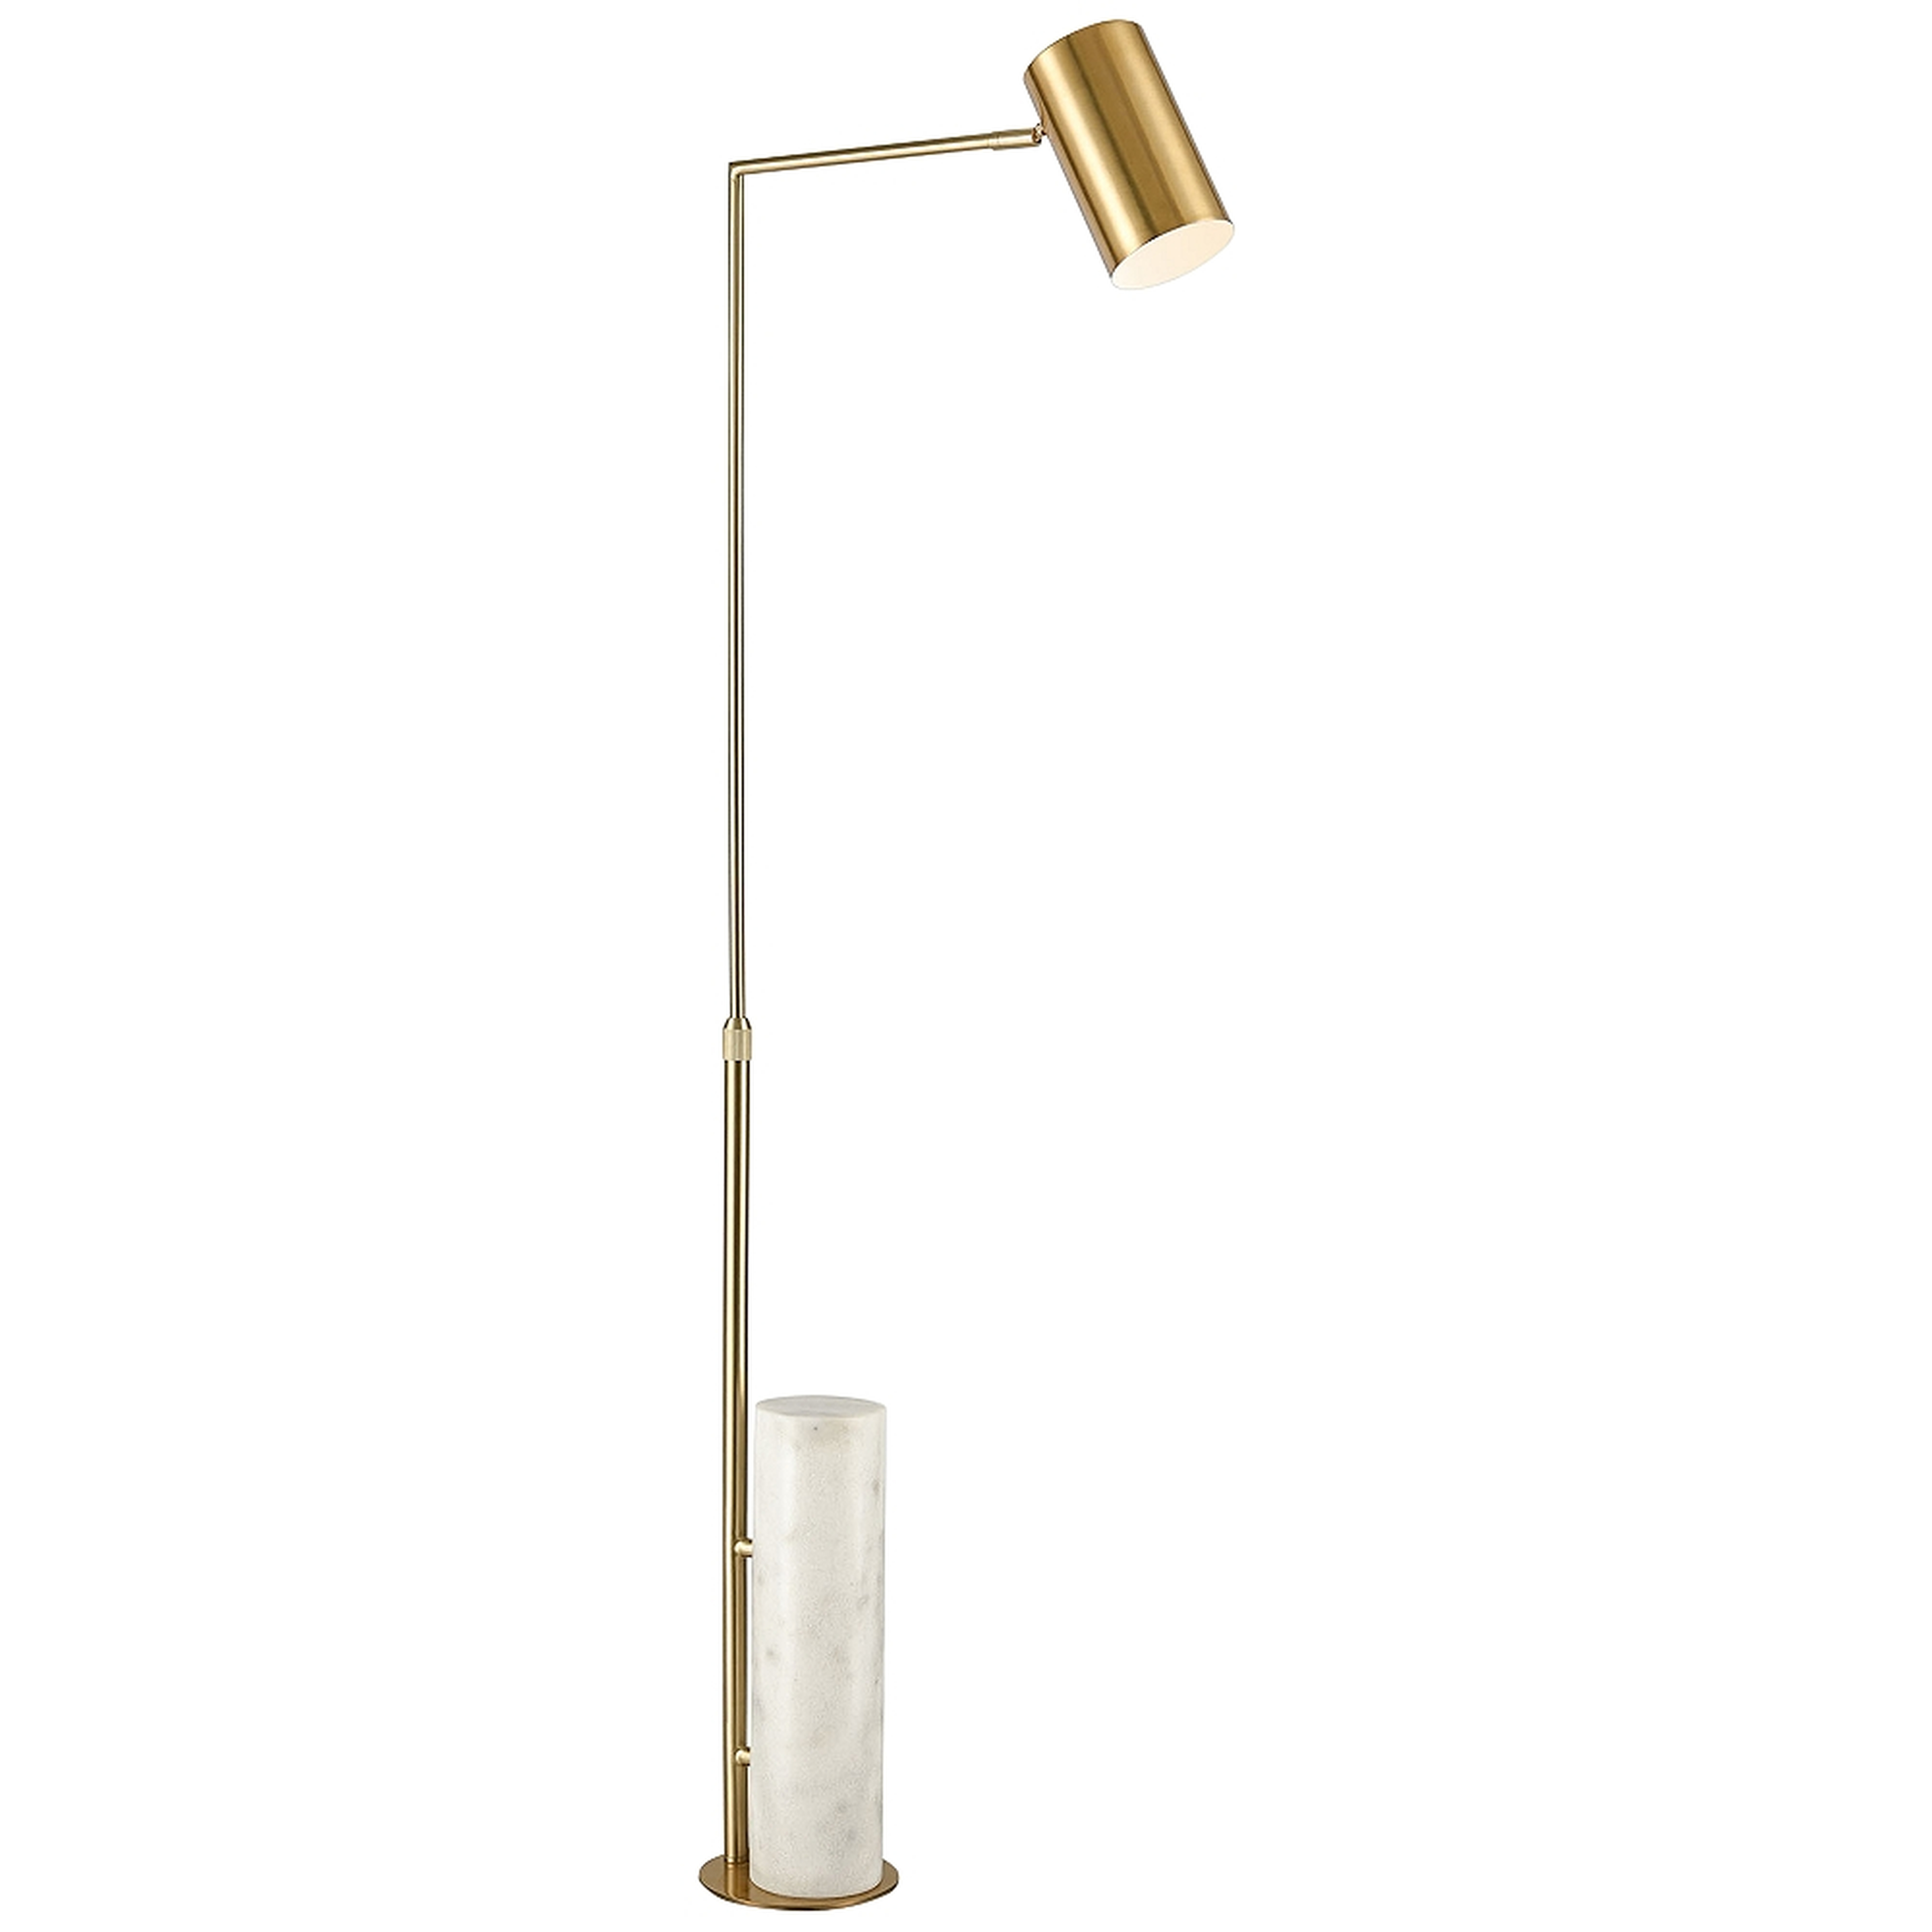 Dimond Dien Honey Brass Metal Adjustable LED Arc Floor Lamp - Style # 544R0 - Lamps Plus